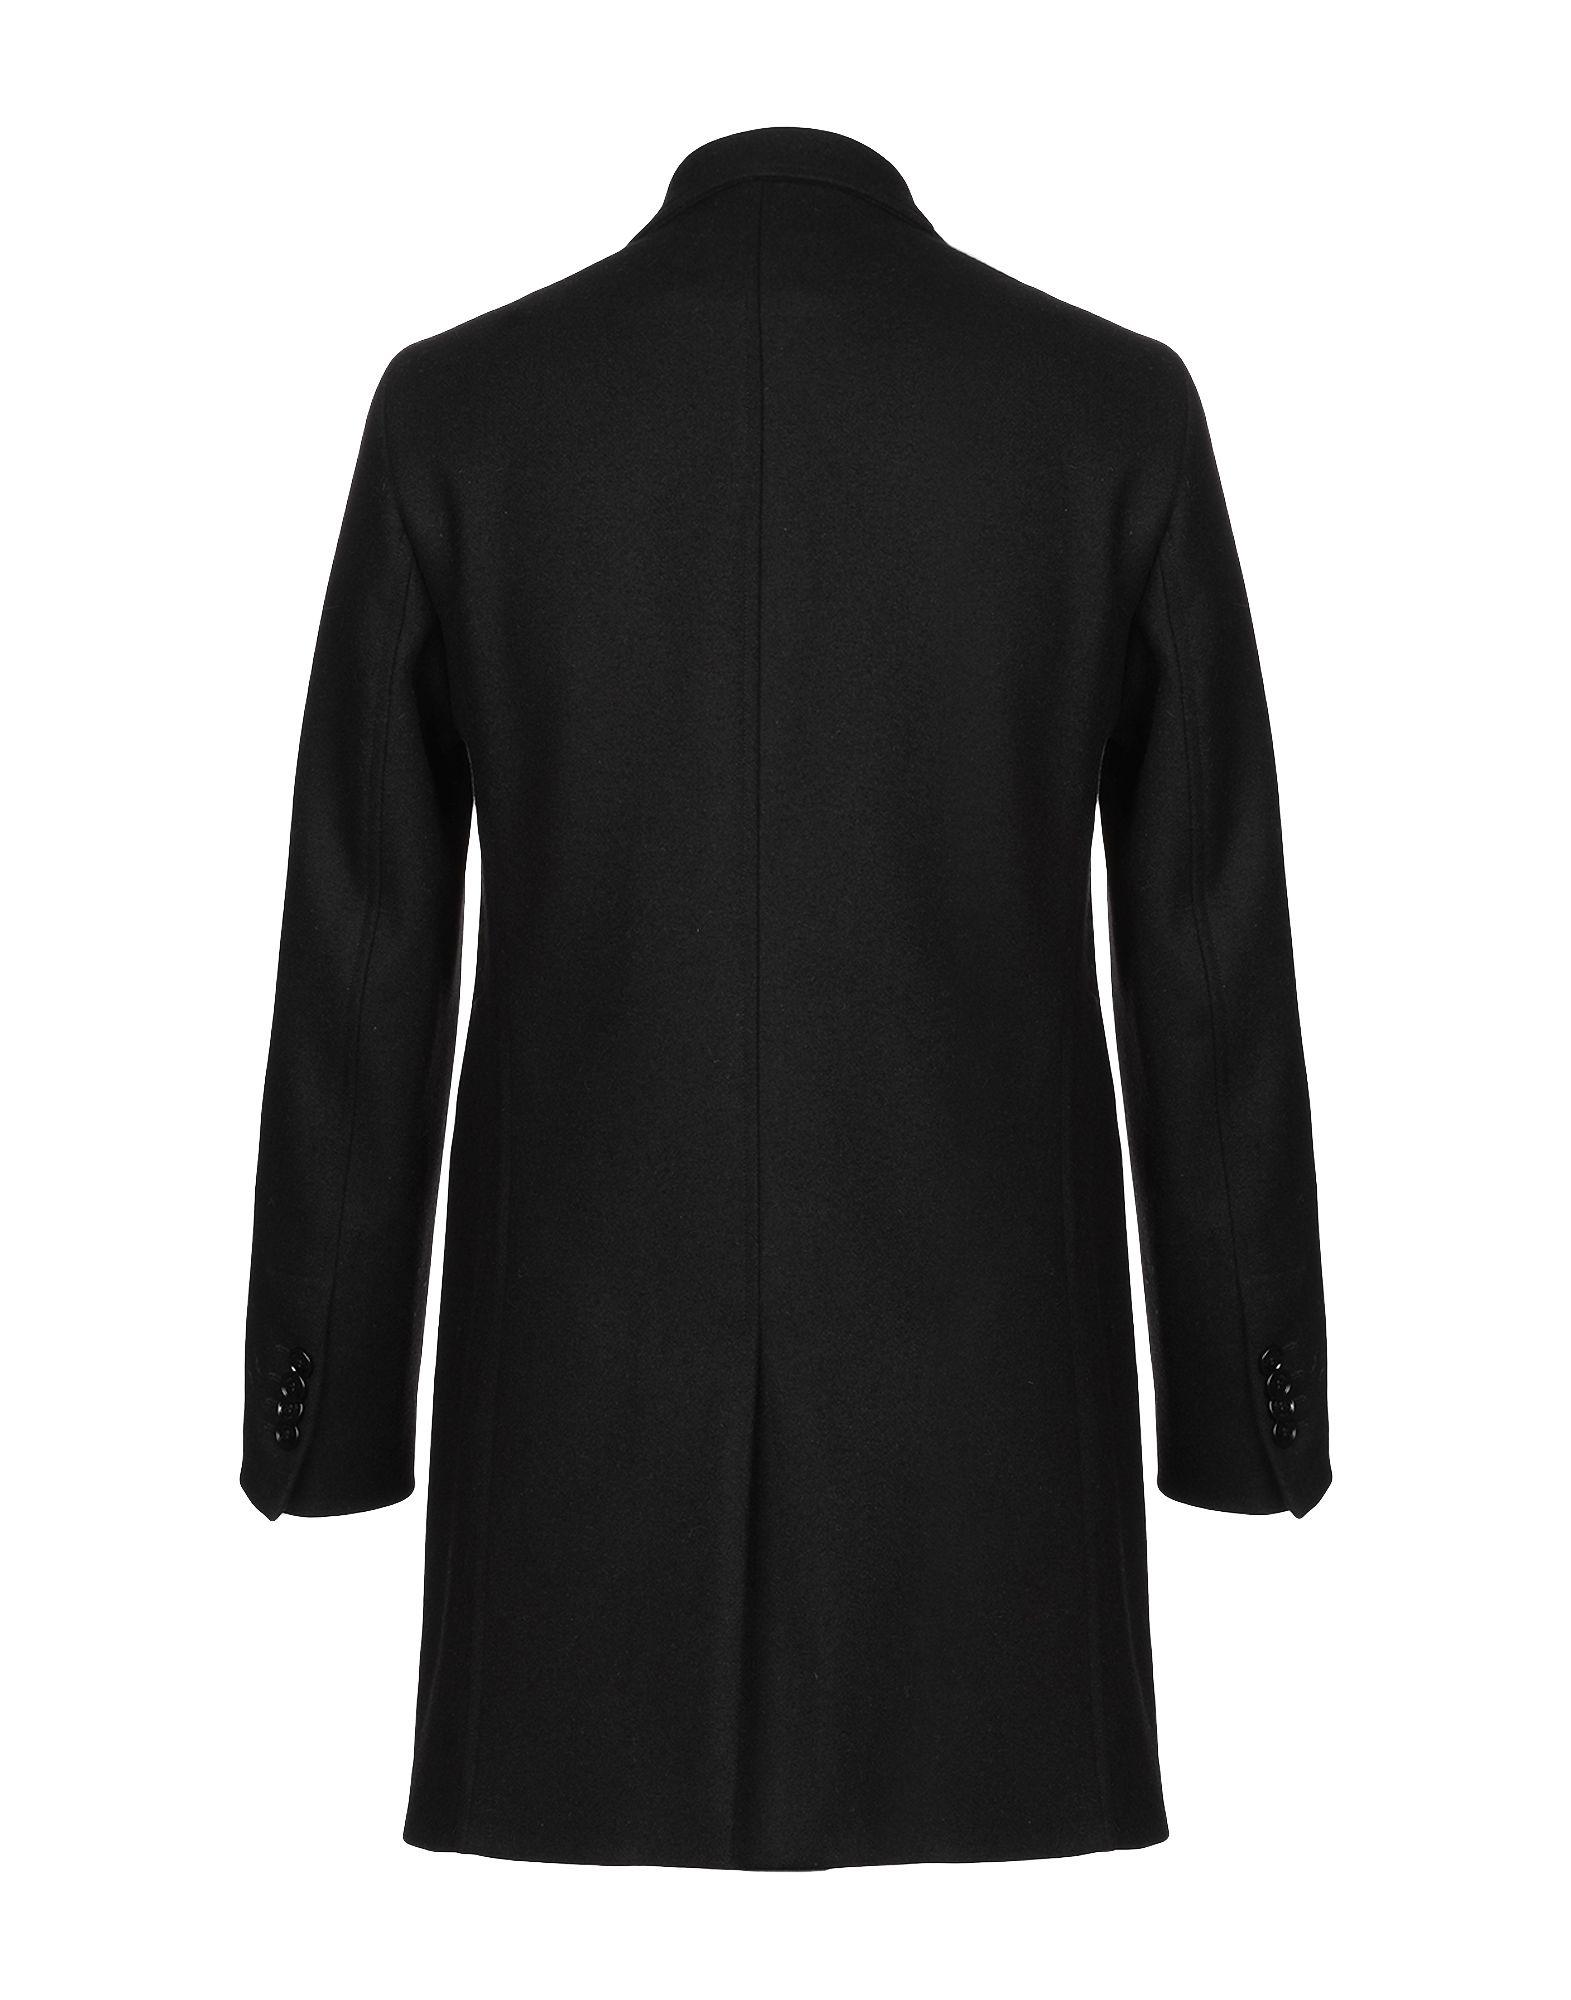 Marciano Synthetic Coat in Black for Men - Lyst